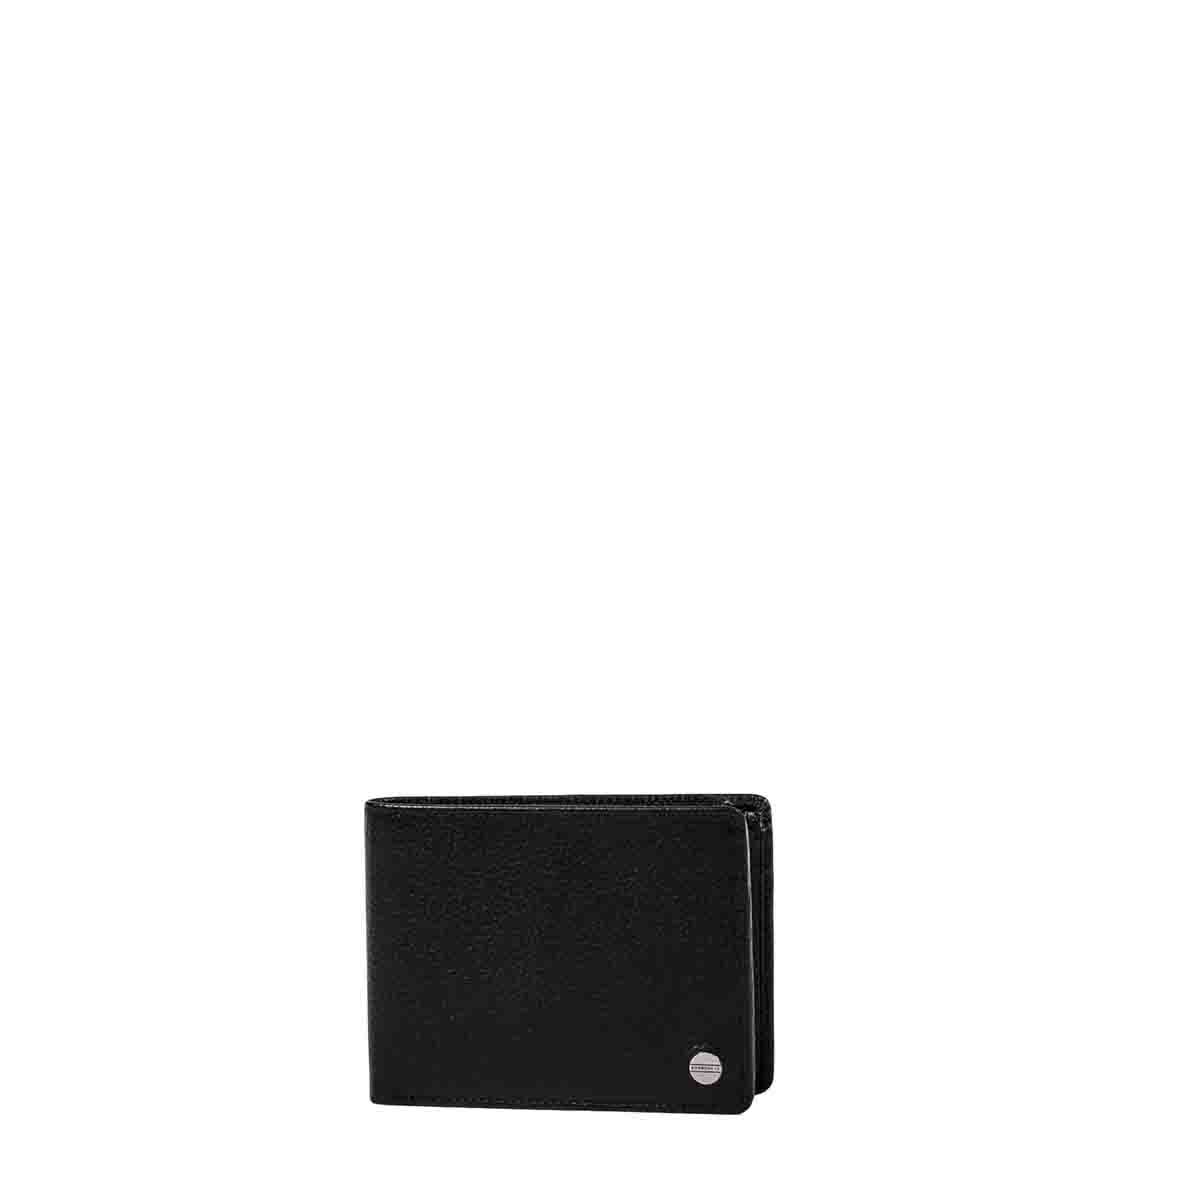 Borbonese Black Leather Wallet